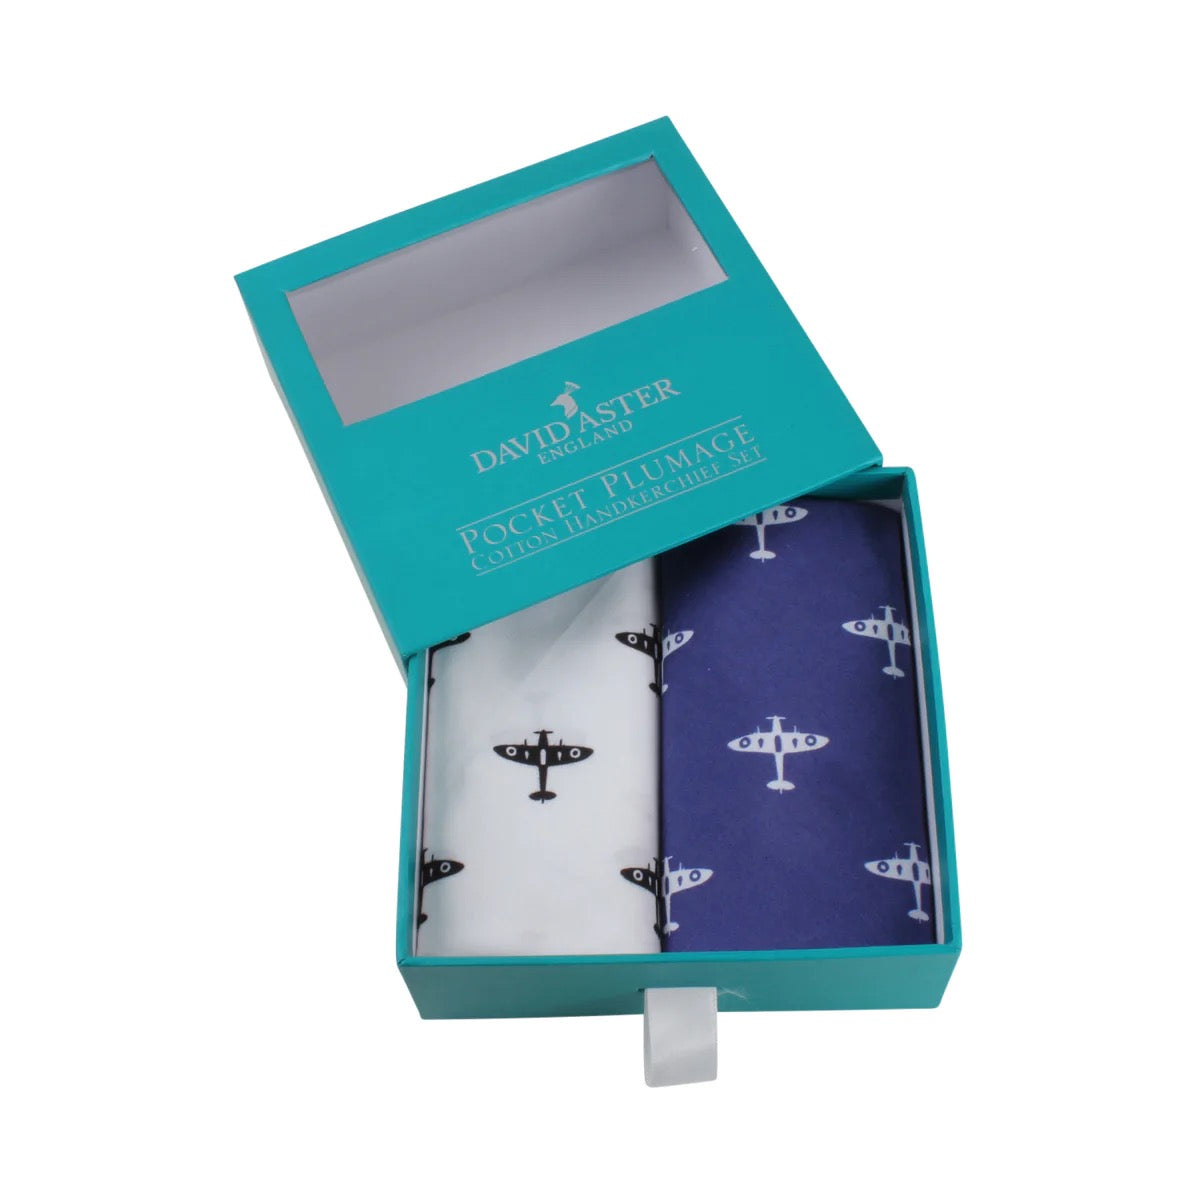 David Aster Spitfire Cotton Handkerchief - Pack of 2